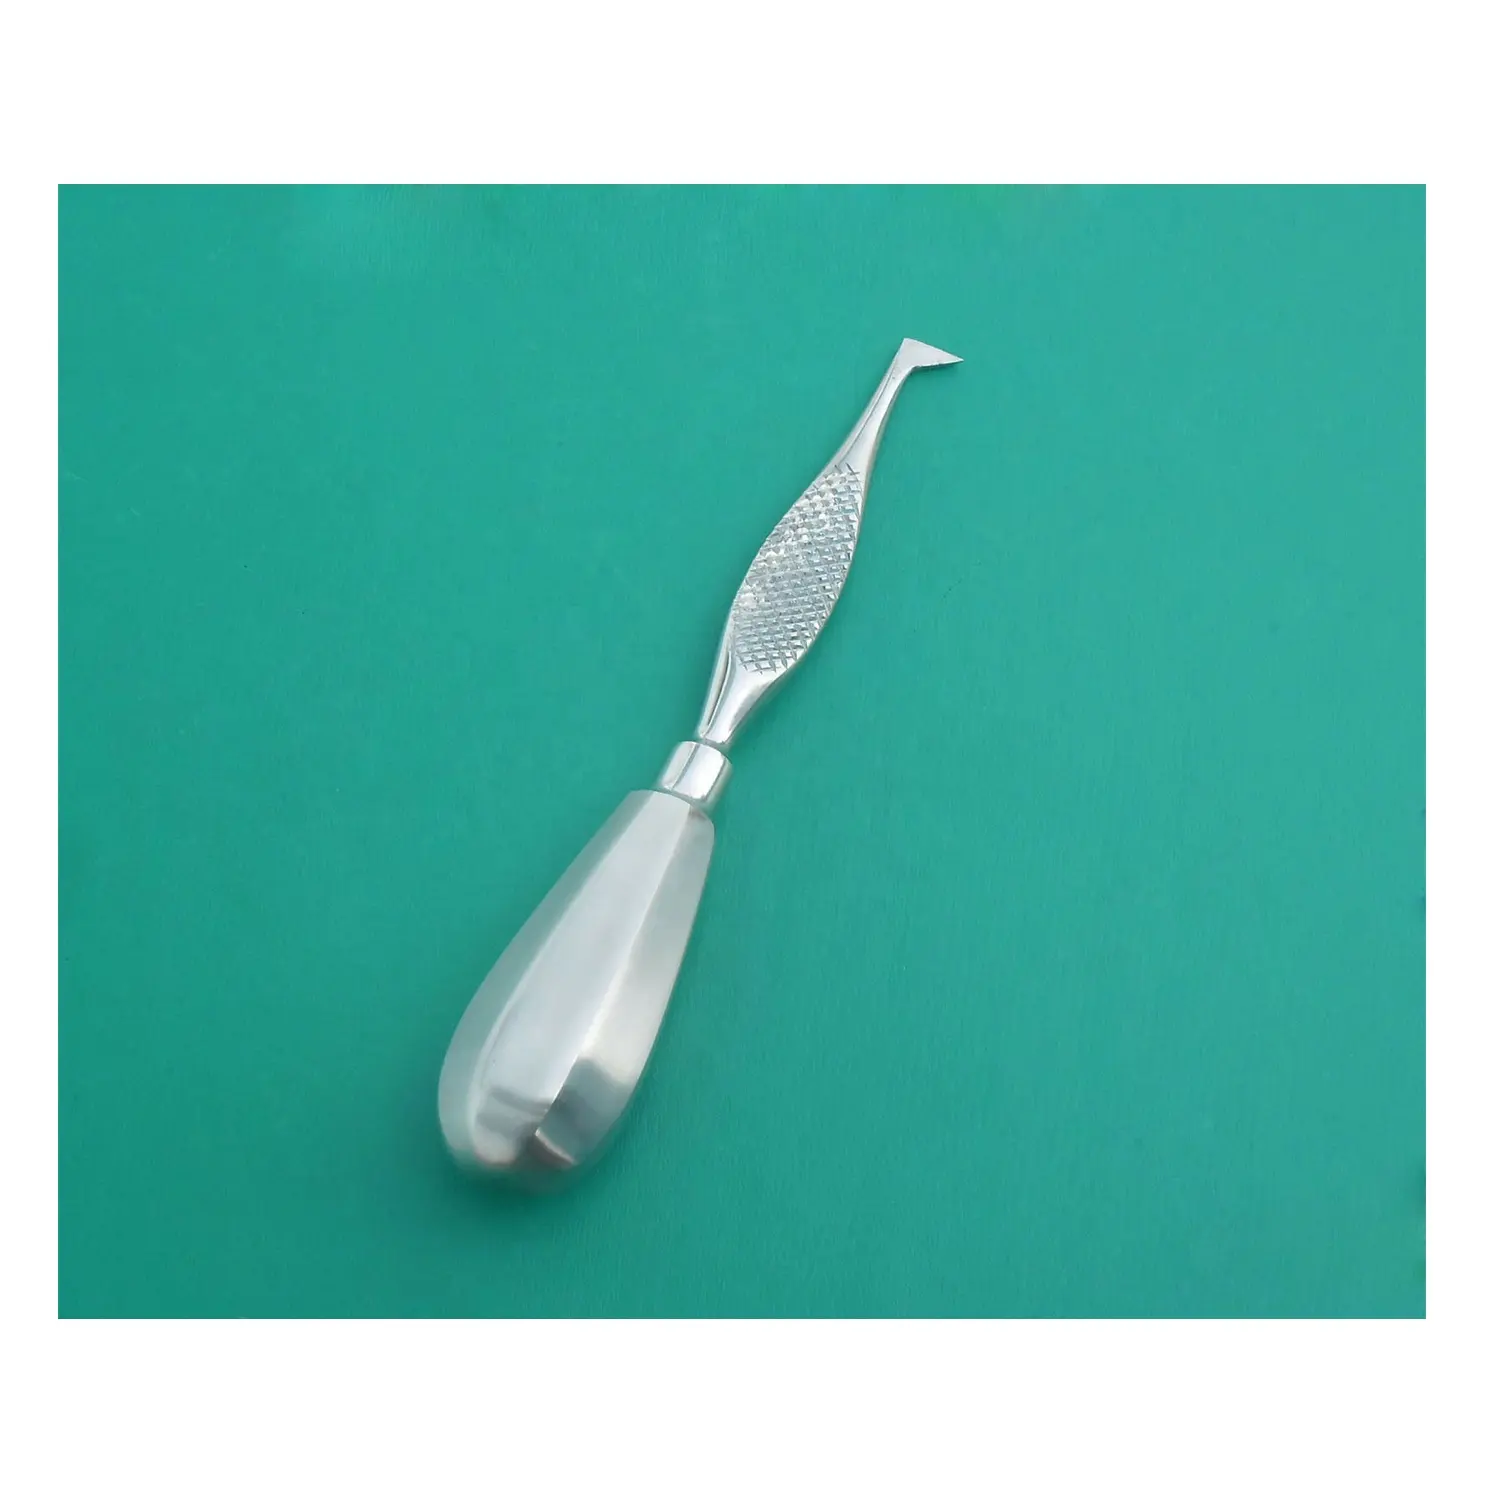 Lift akar Schlemmer perawatan gigi, lift akar kiri baja anti karat Dental melengkung minimal invasif